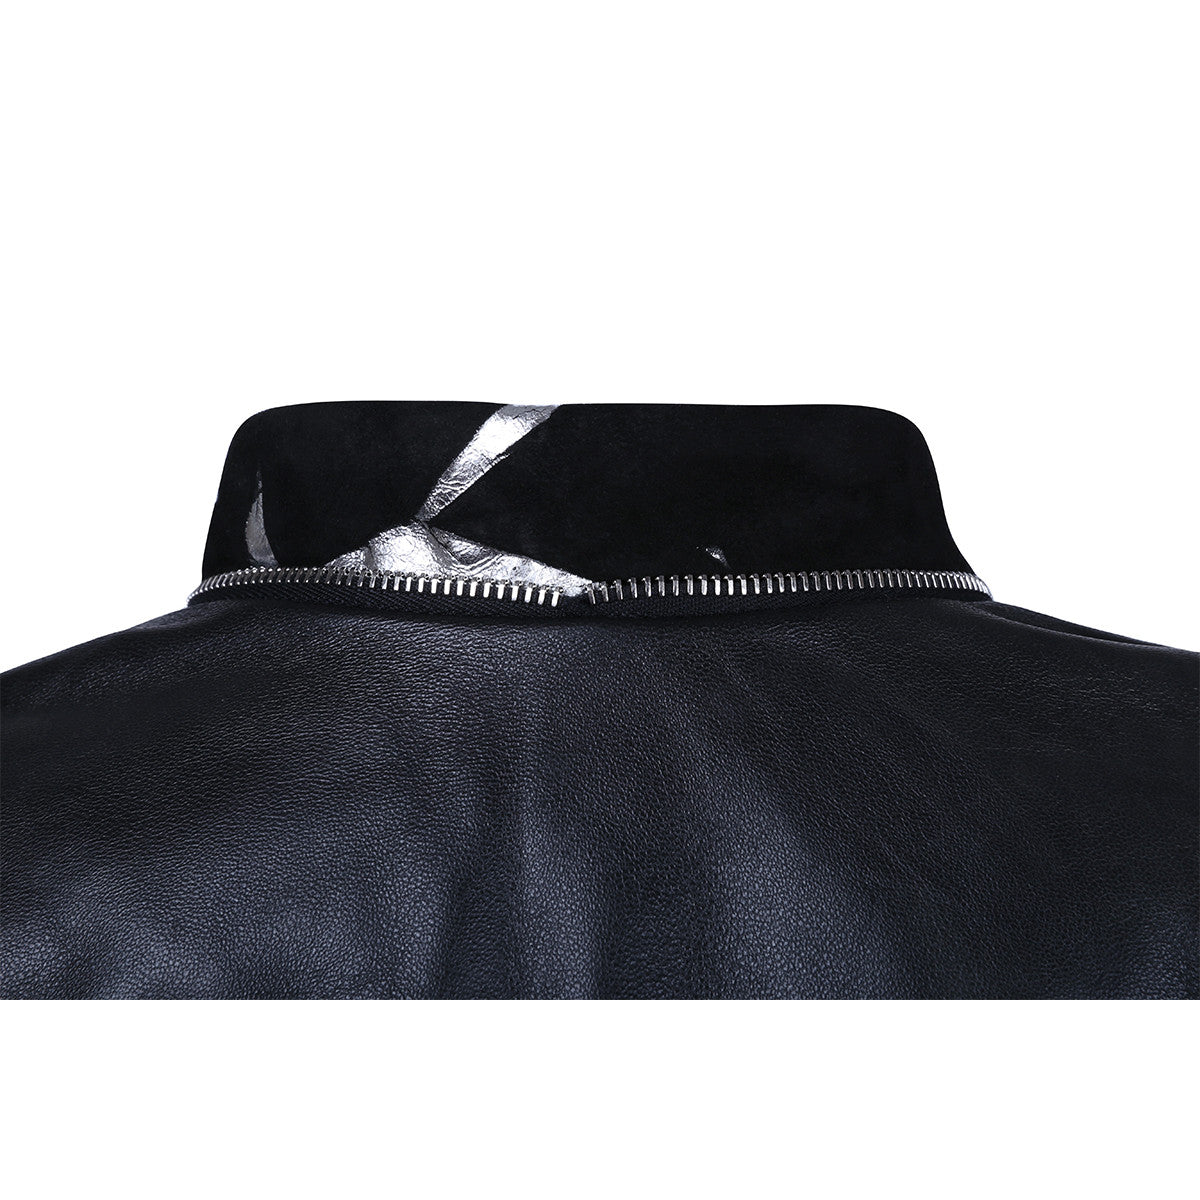 Black Suede Leather Bomber Jacket with Metallic Print Motif - VOLS &amp; ORIGINAL